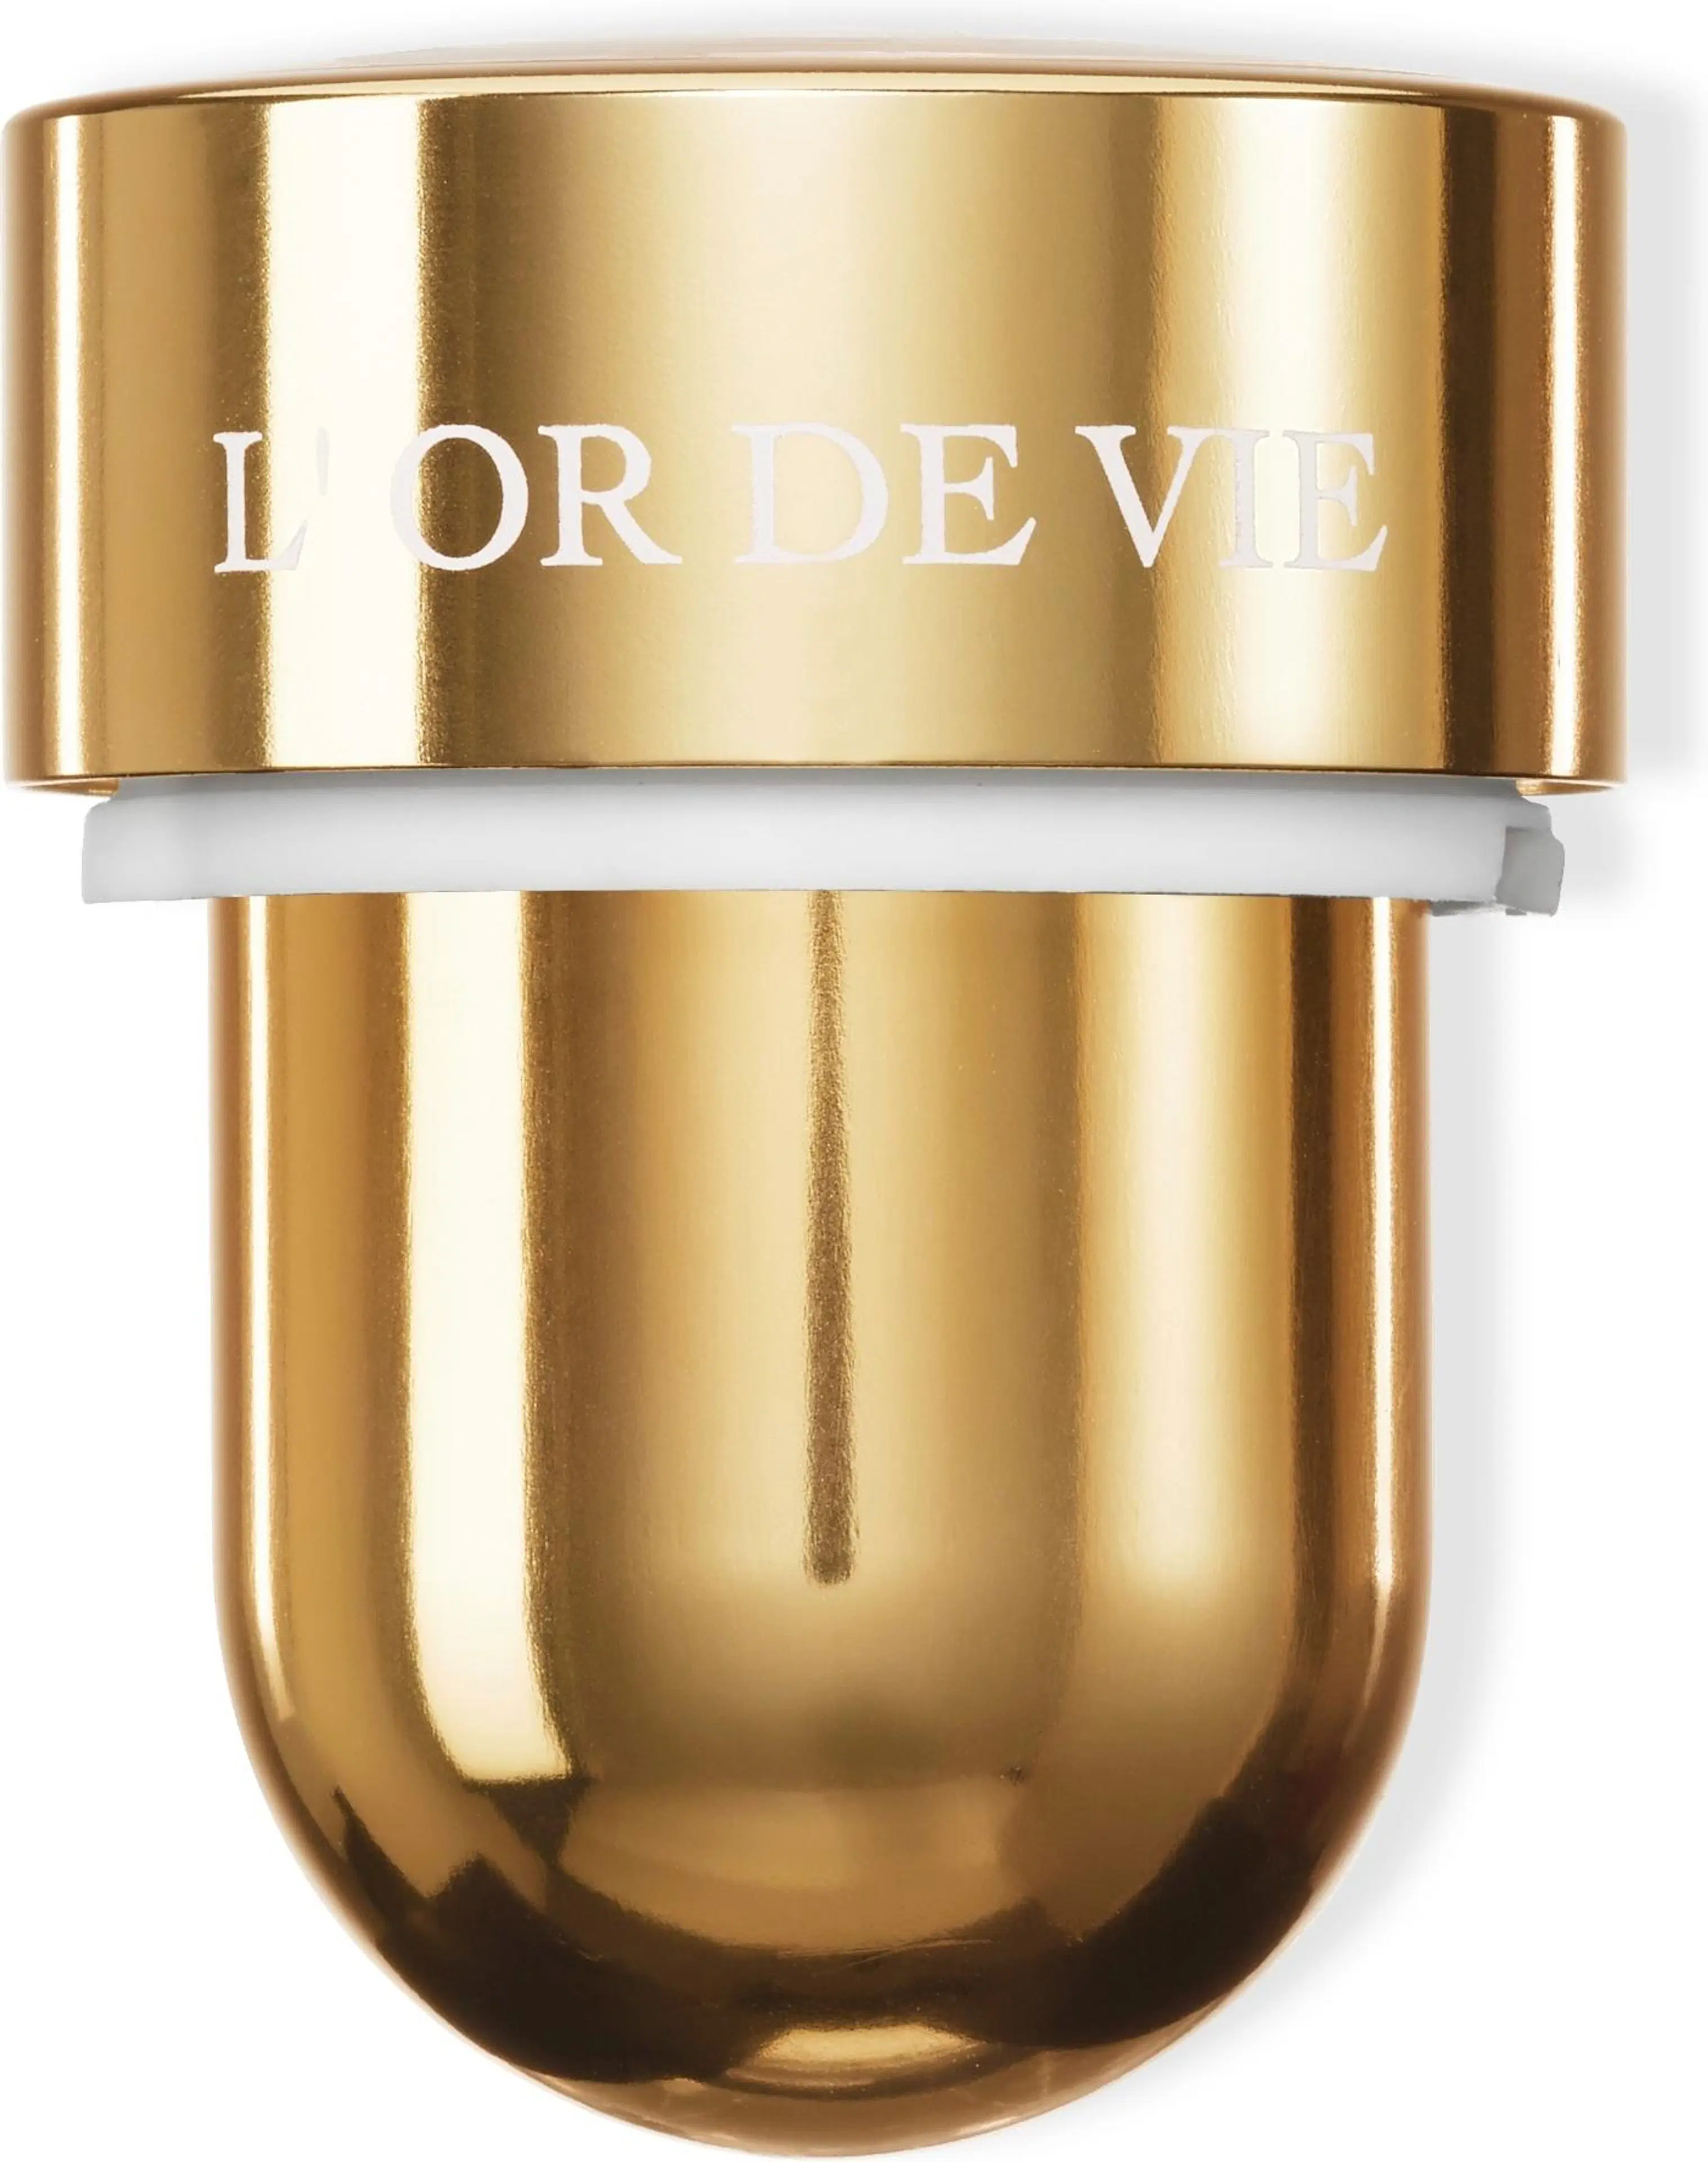 DIOR L'or de vie la Creme Refill silmänympärysvoide täyttöpakkaus 15 ml